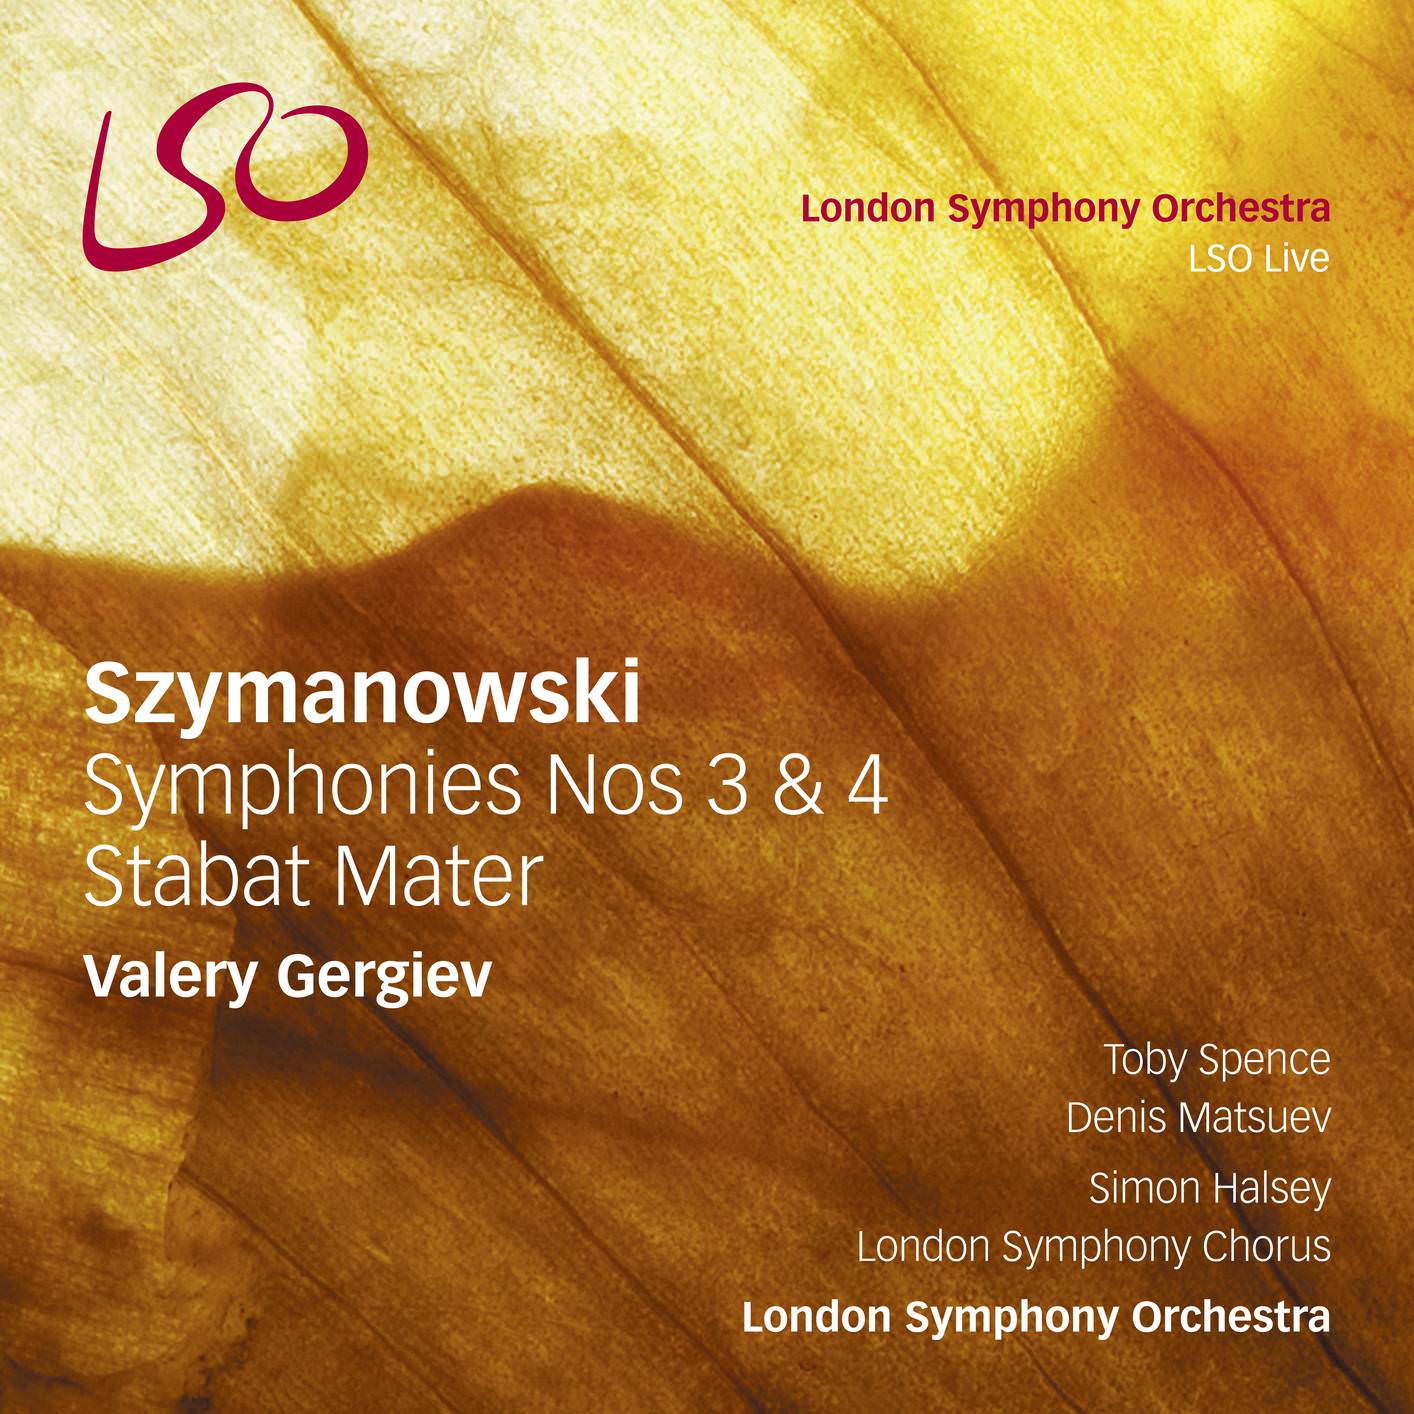 London Symphony Orchestra, Valery Gergiev - Szymanowski: Symphonies Nos. 3 & 4, Stabat Mater (2013/2018) [FLAC 24bit/96kHz]